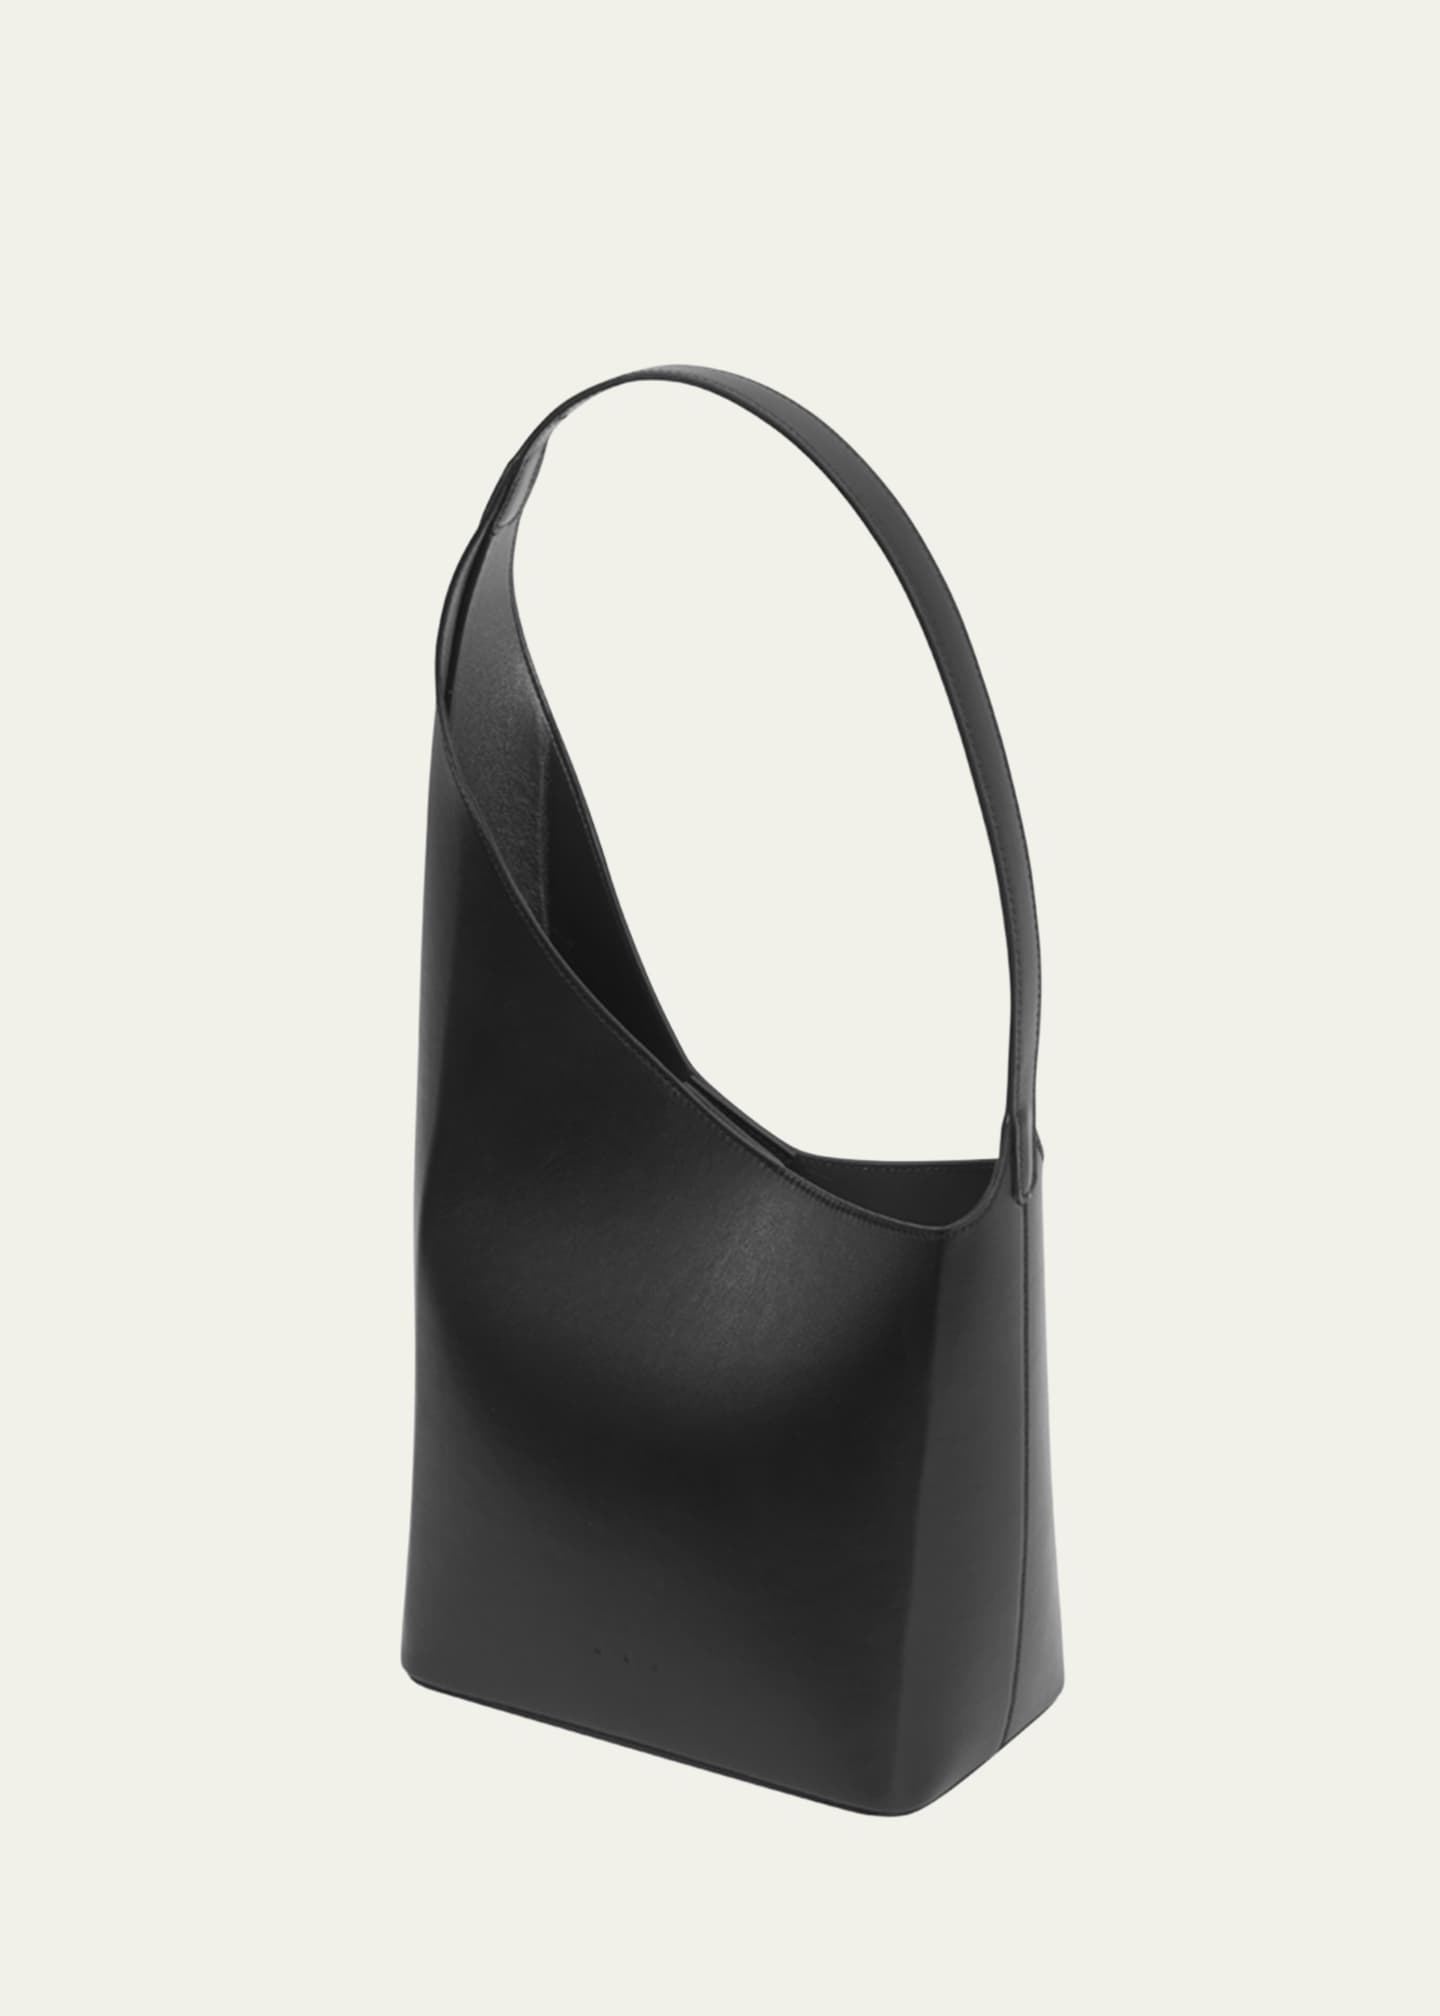 Aesther Ekme Demi Lune Leather Shoulder Bag